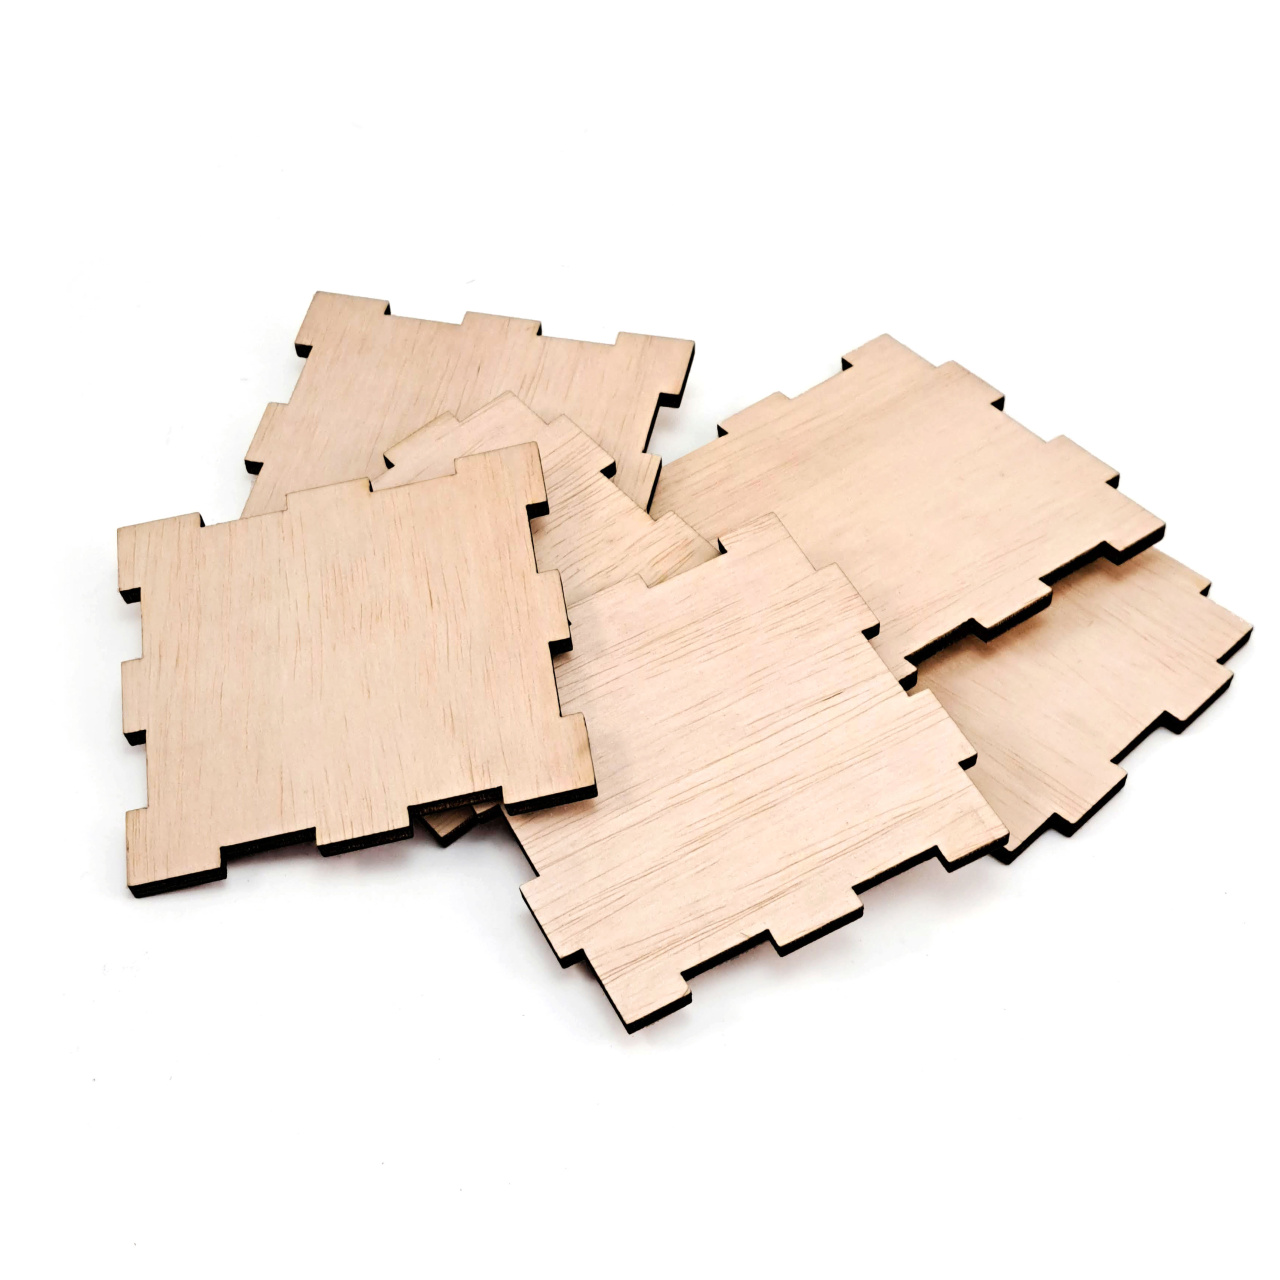 Cubuleț placaj lemn, 10×10×10 cm :: 10 cm